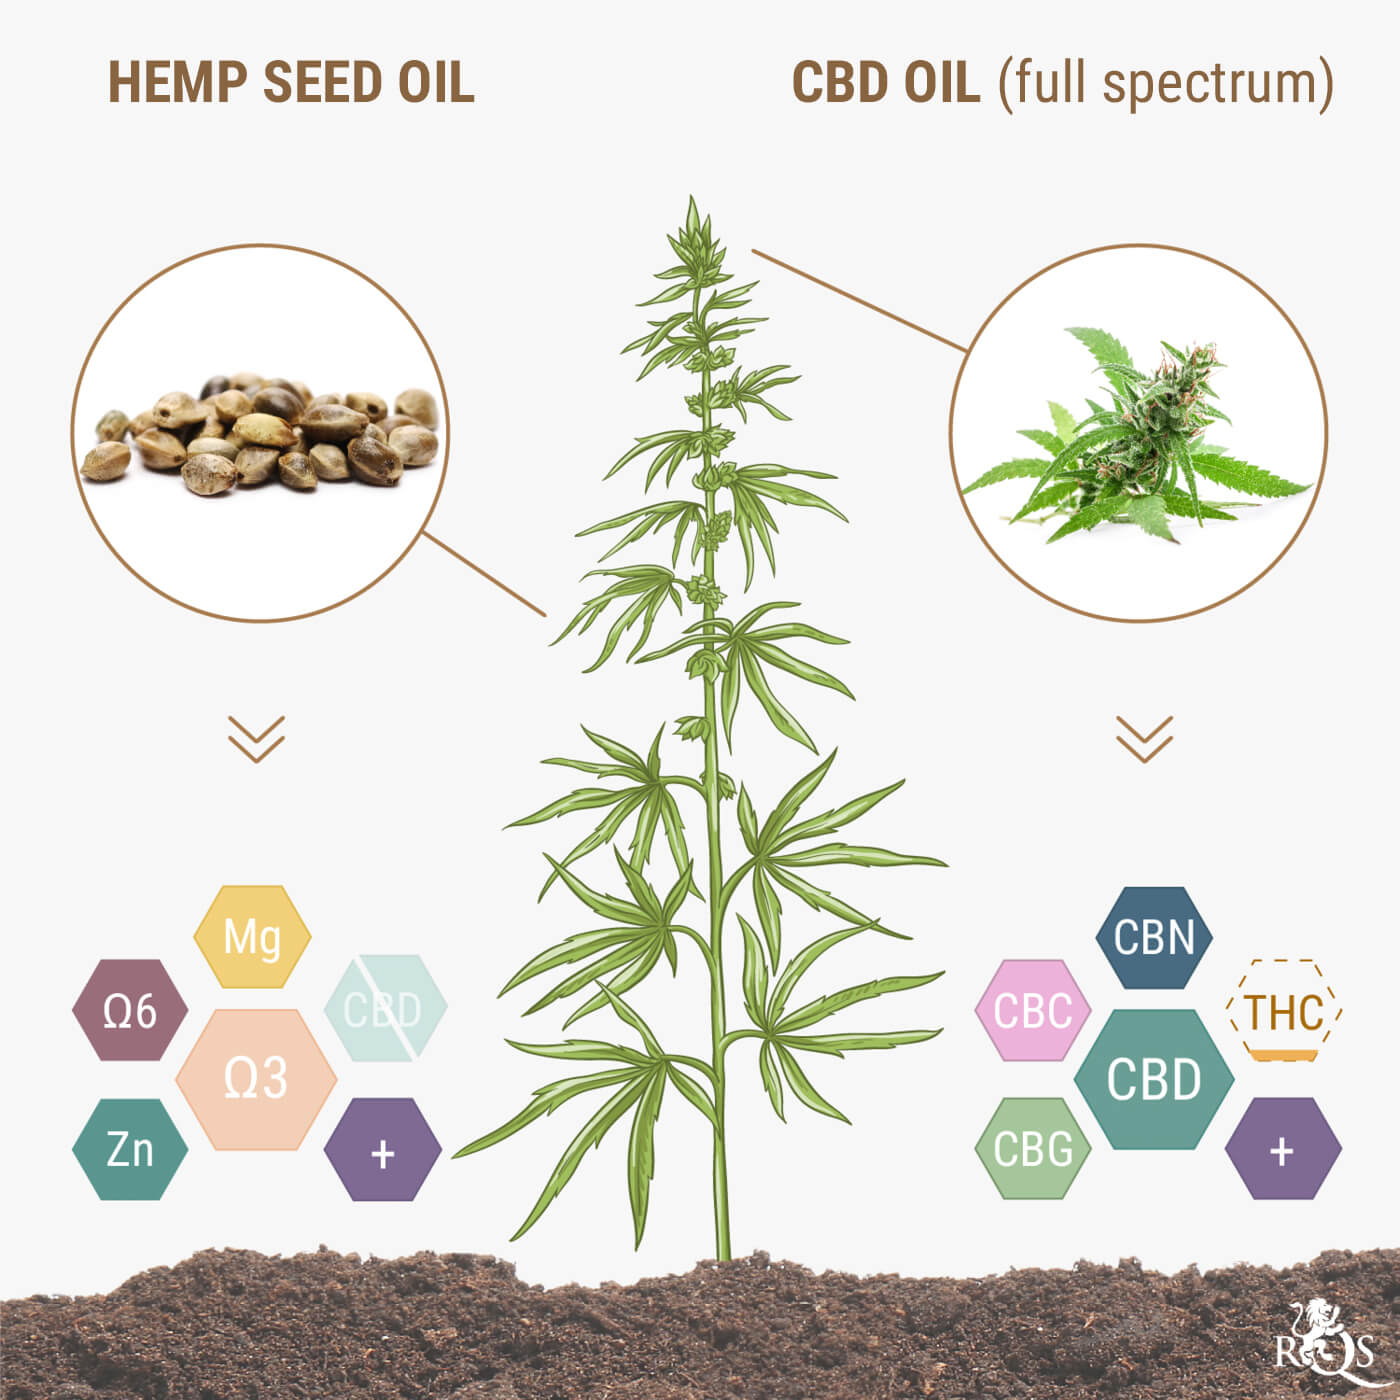 Do Hemp Seeds/Hemp Seed Oil Contain CBD?